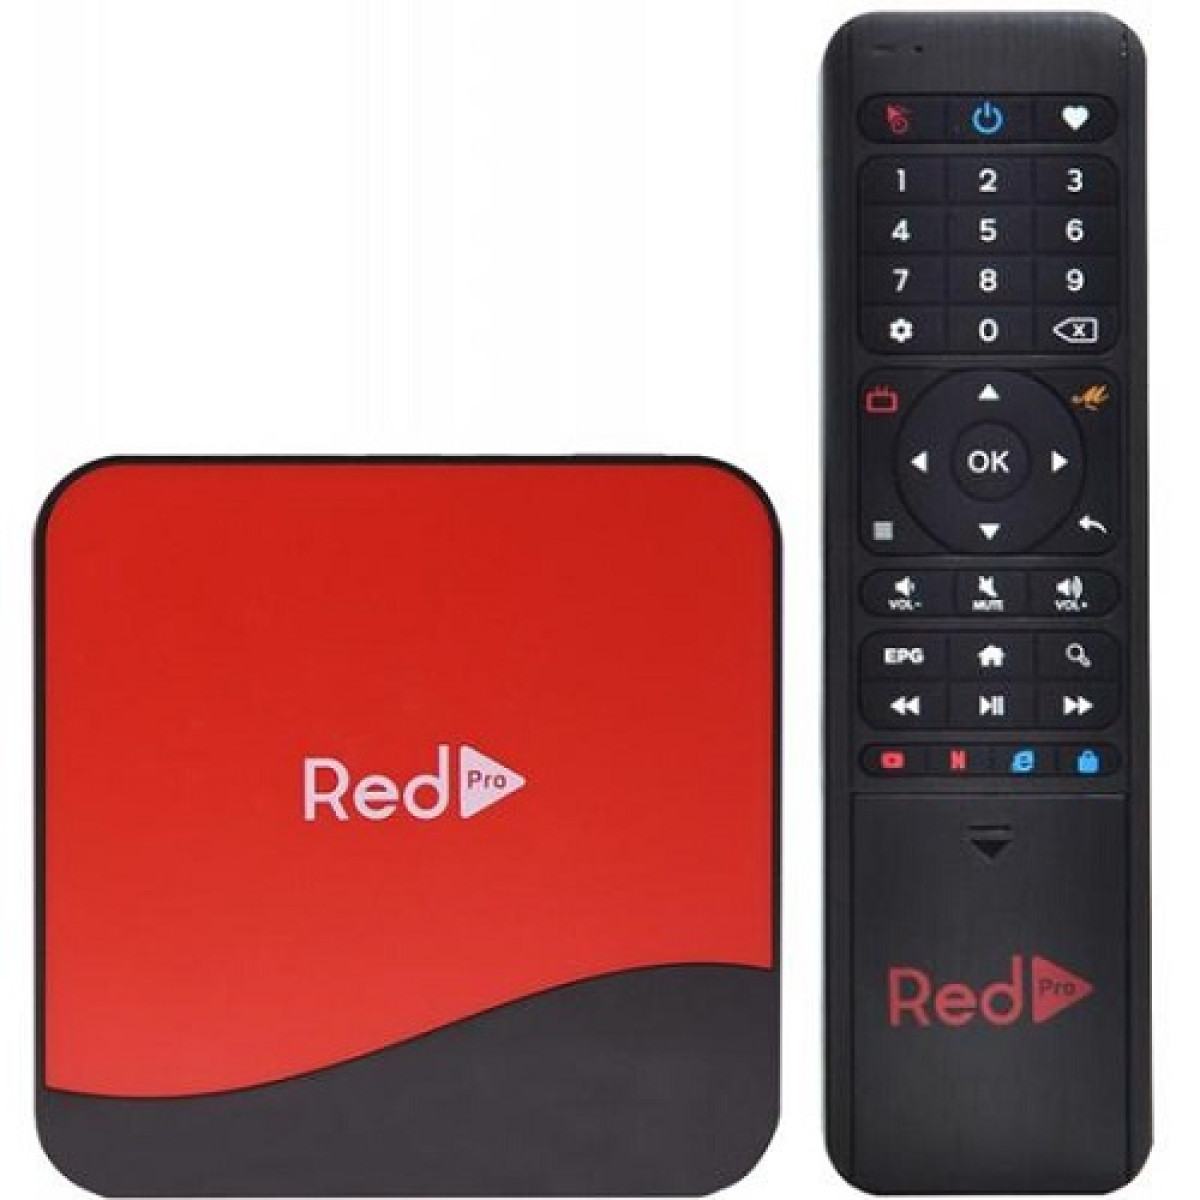 Redstick 2 IPTV